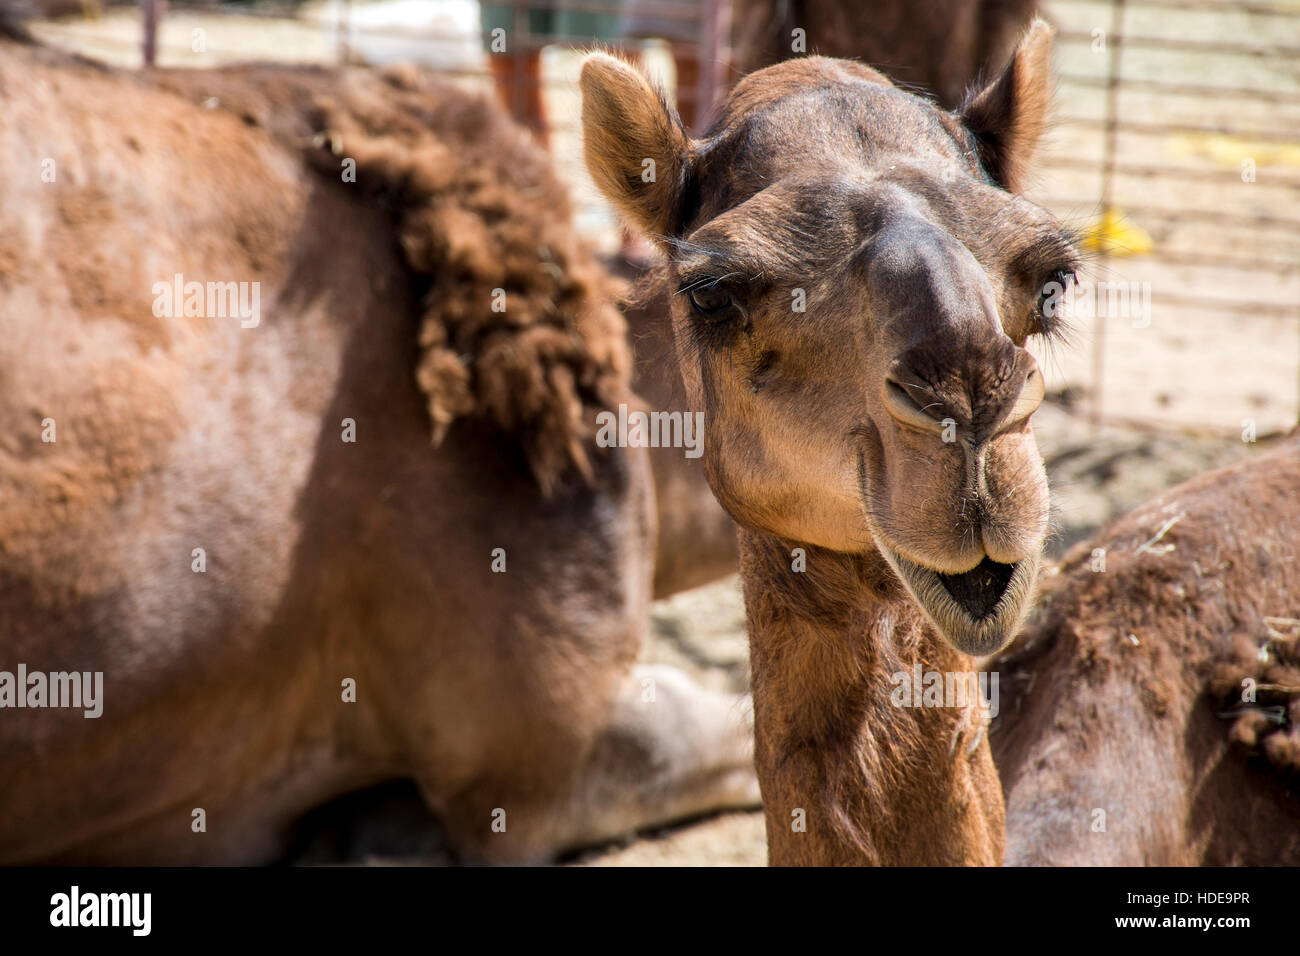 wildlife Camel funny sweet looking smiling inside Camera Oman salalah Arabic 3 Stock Photo